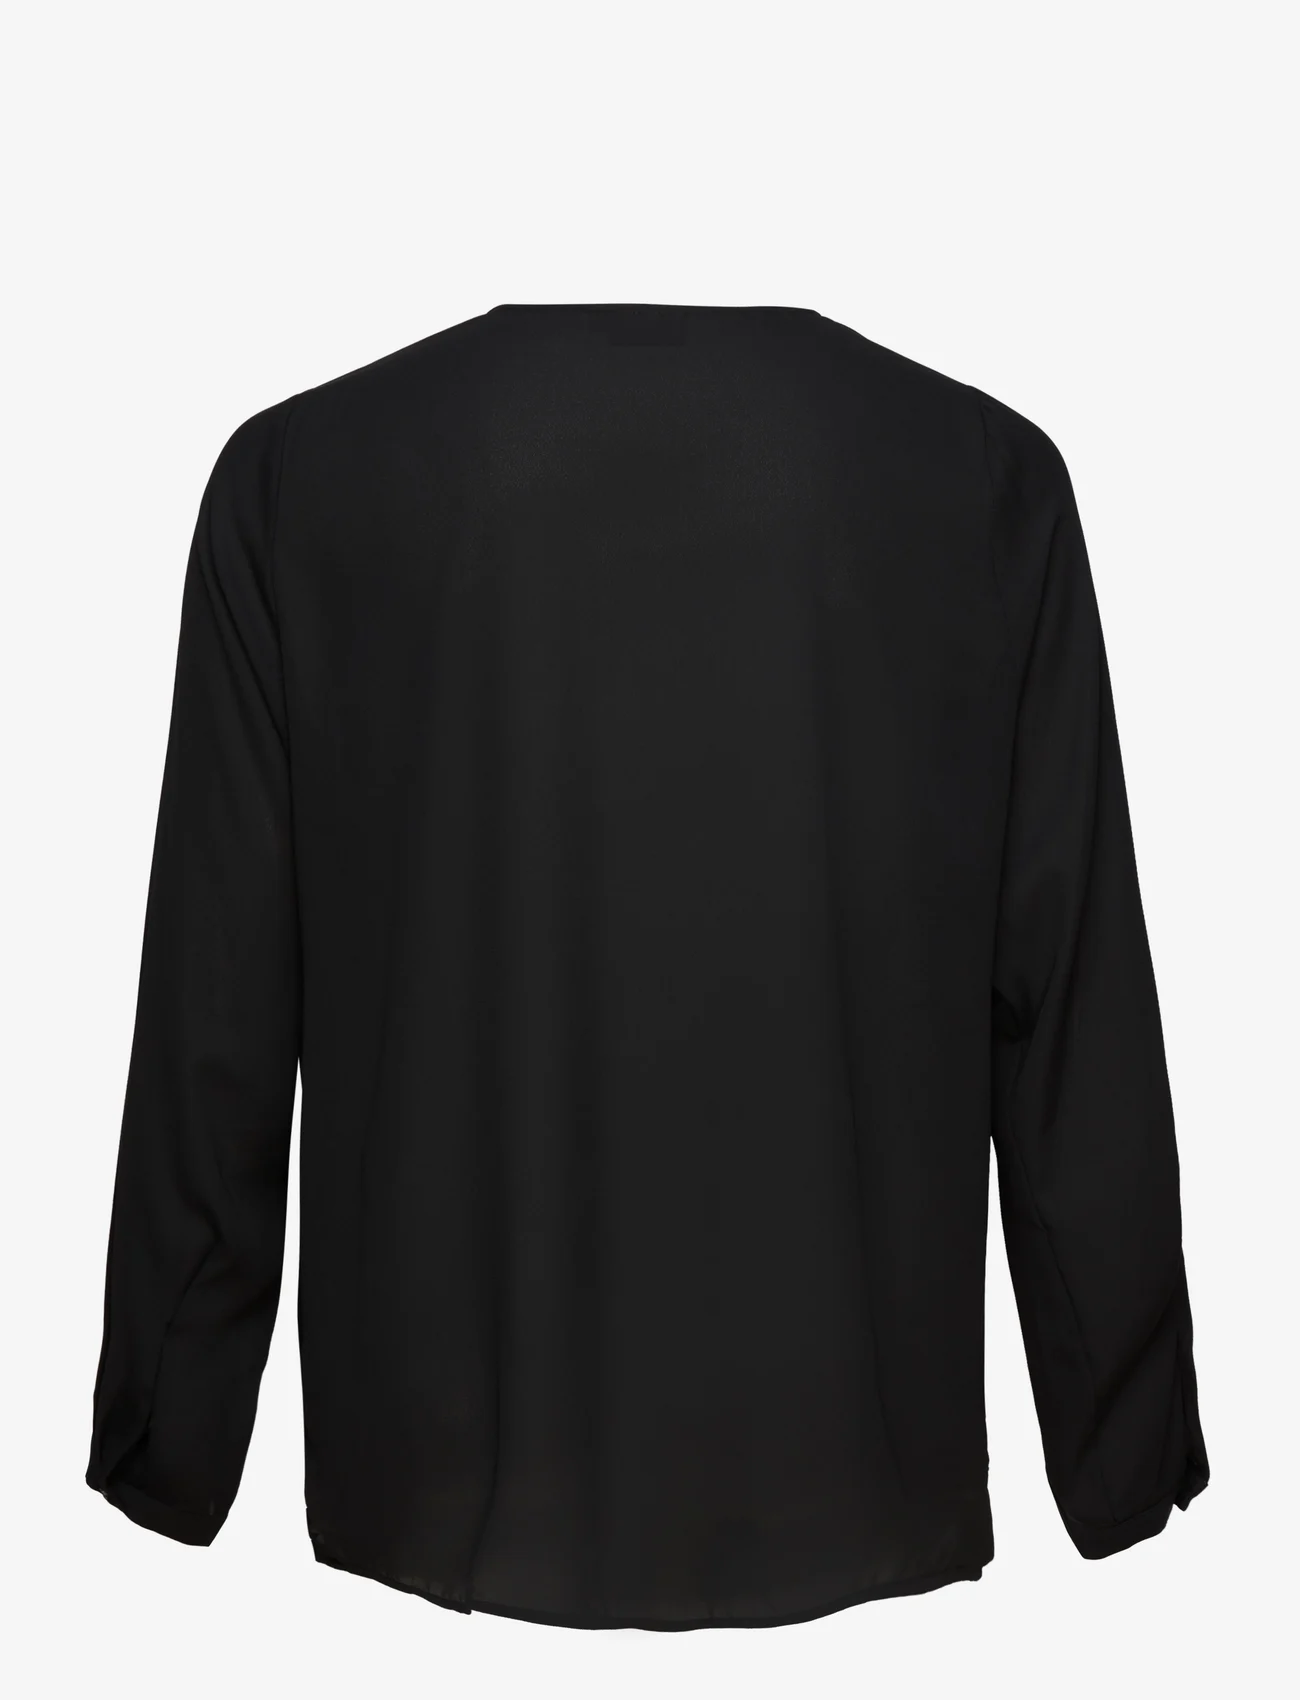 Zizzi - VSELI, L/S, SHIRT - long-sleeved shirts - black - 1